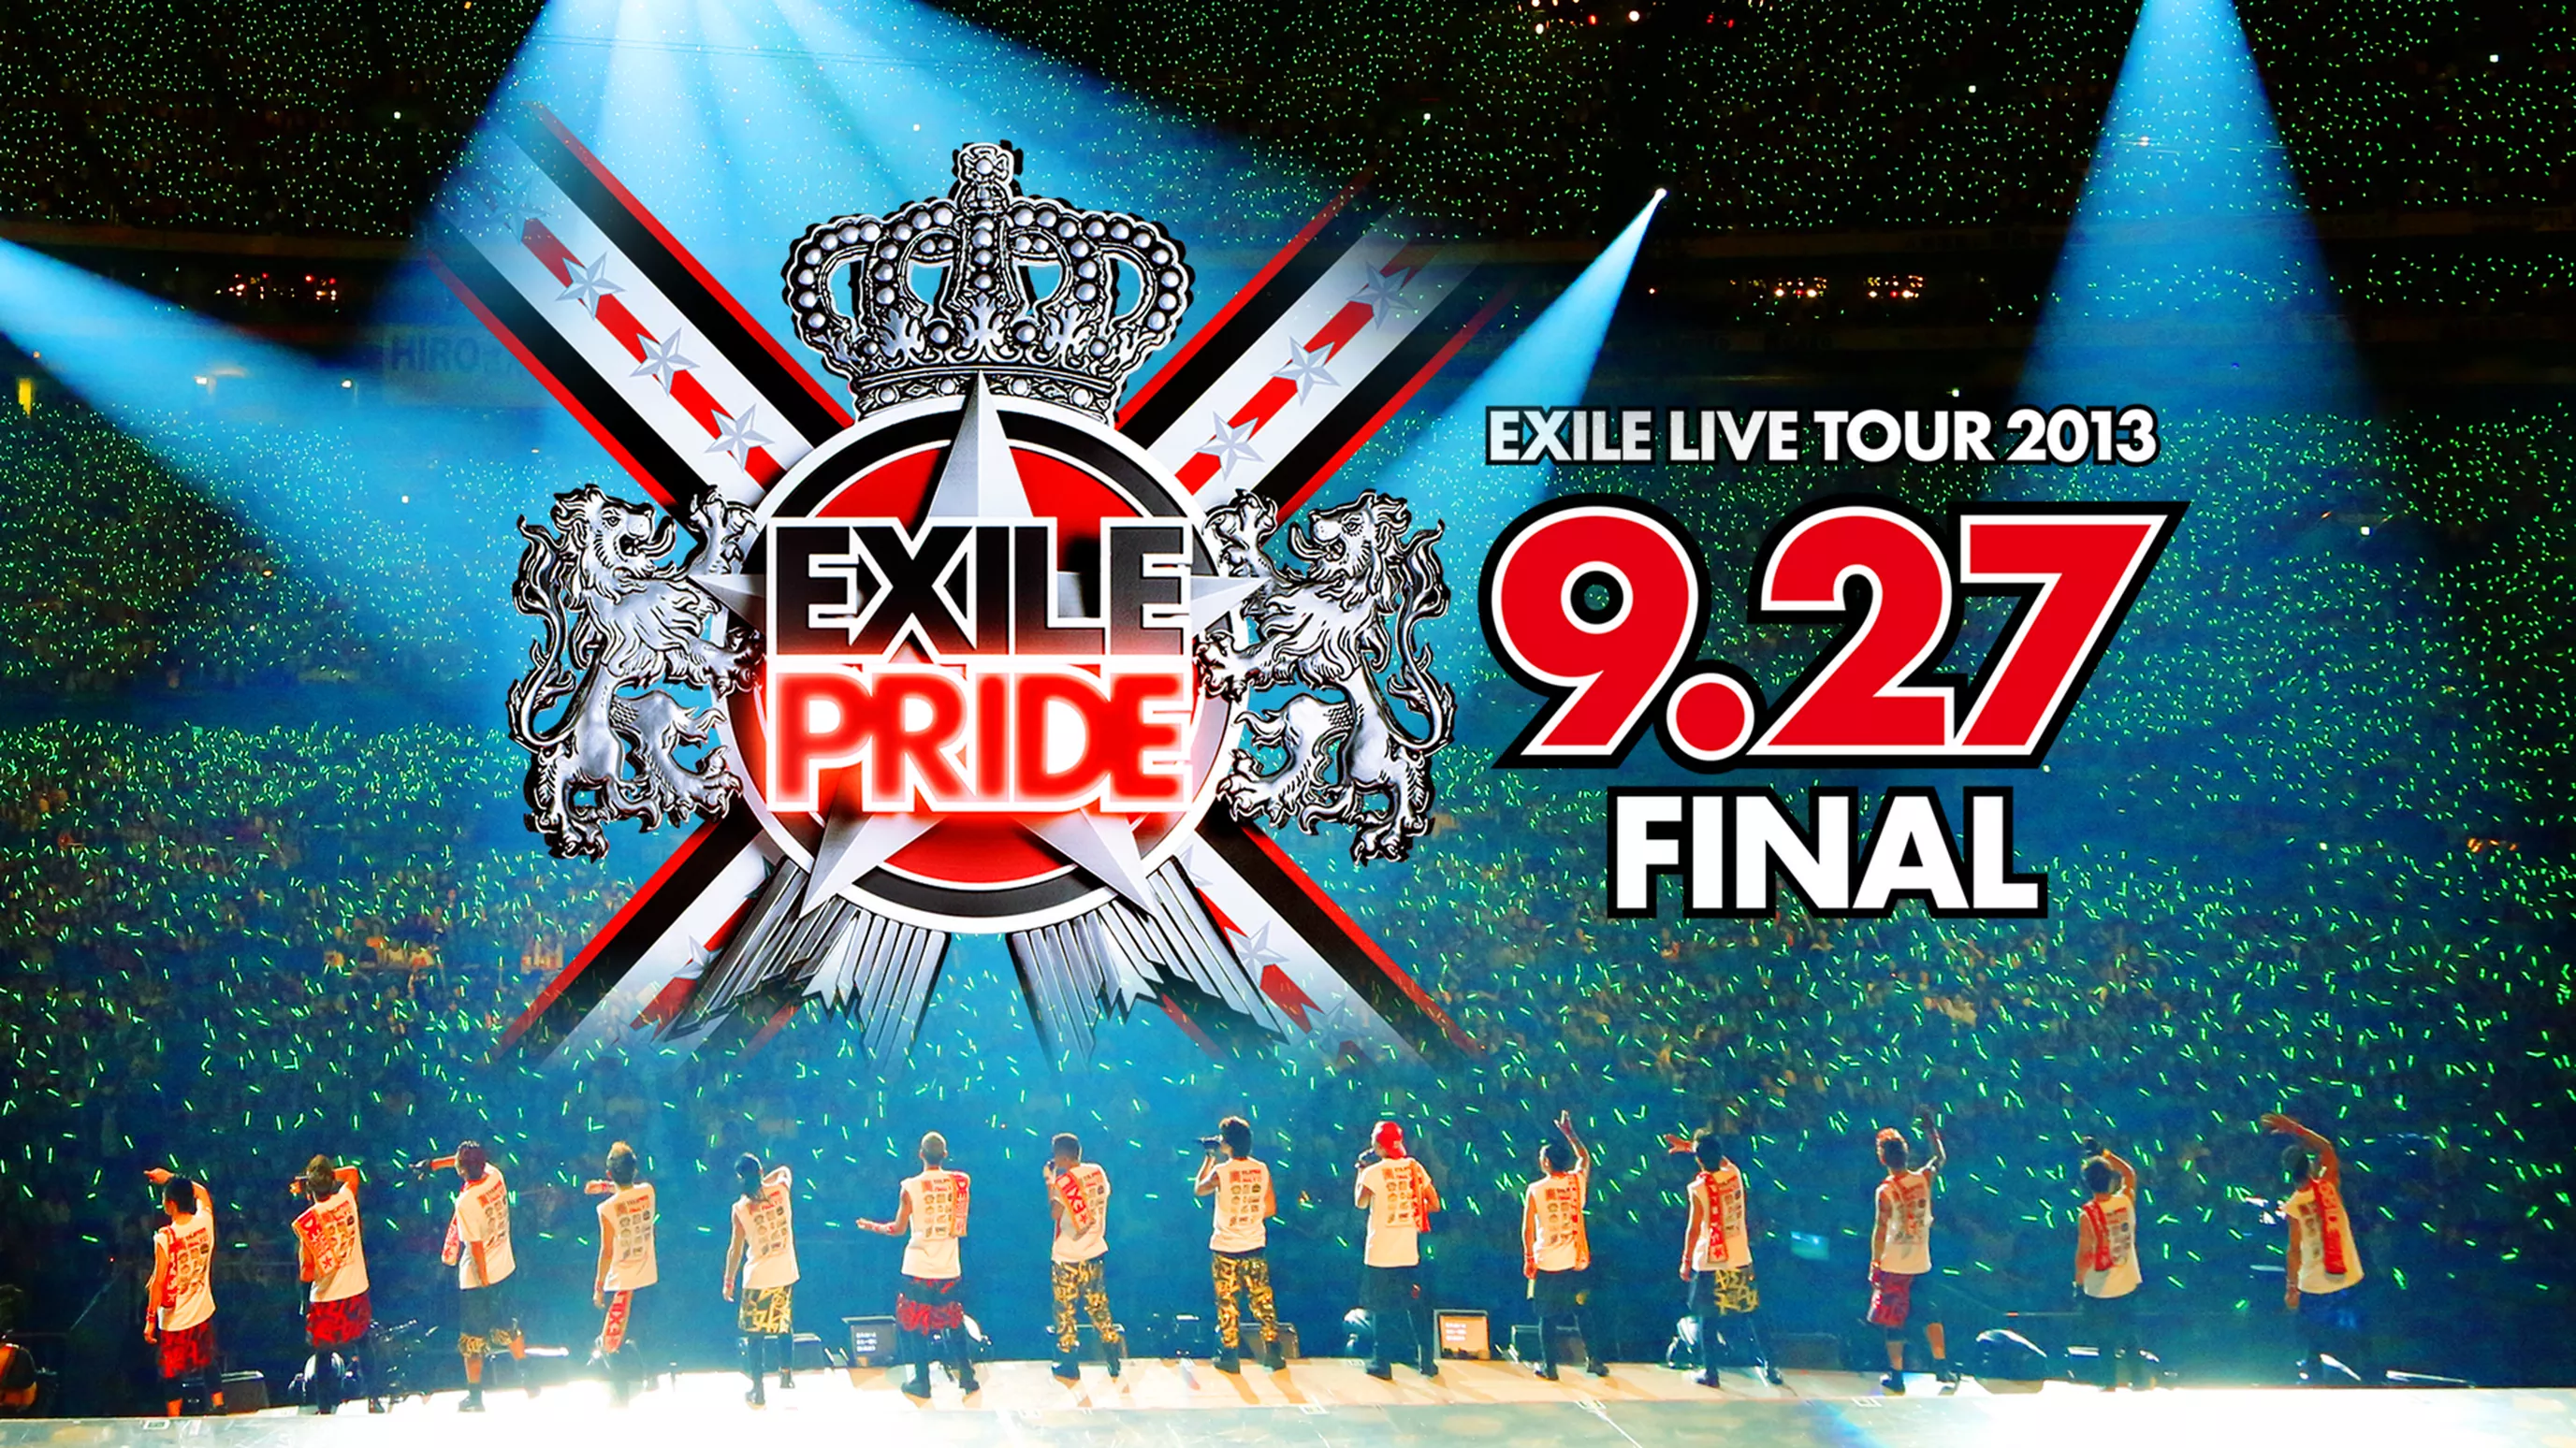 EXILE LIVE TOUR 2013 “EXILE PRIDE” 9.27 FINAL